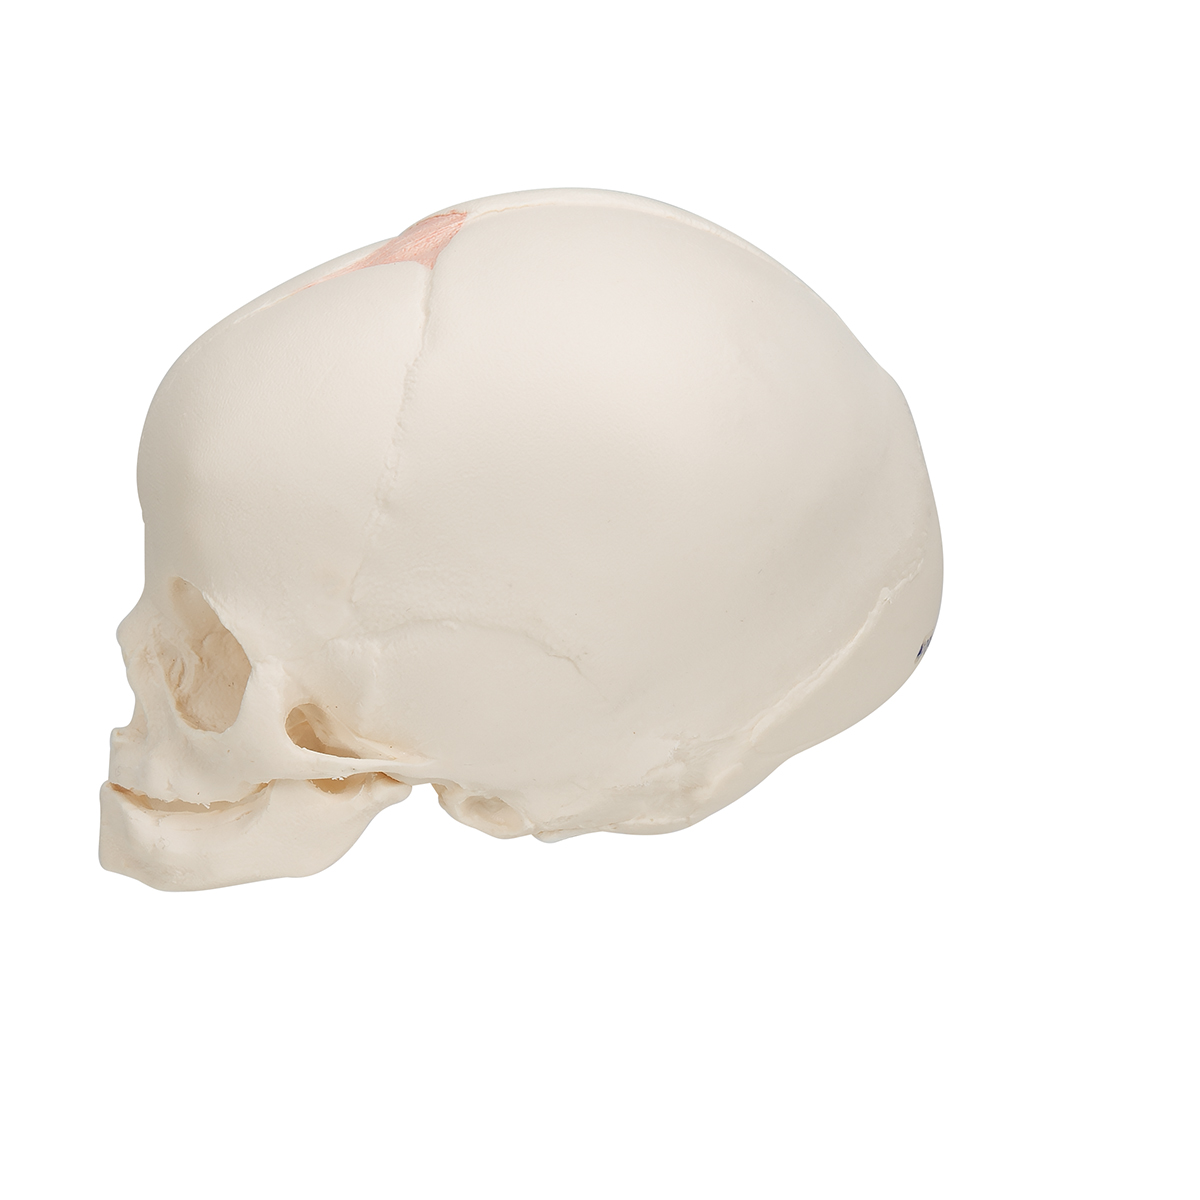 ZLF Foetal Skull Model 30Th Week of Pregnancy Naturally Size Fetal Skull Anatomical Model for Medical Educatioanal PVC Material Human Anatomy Science Models 